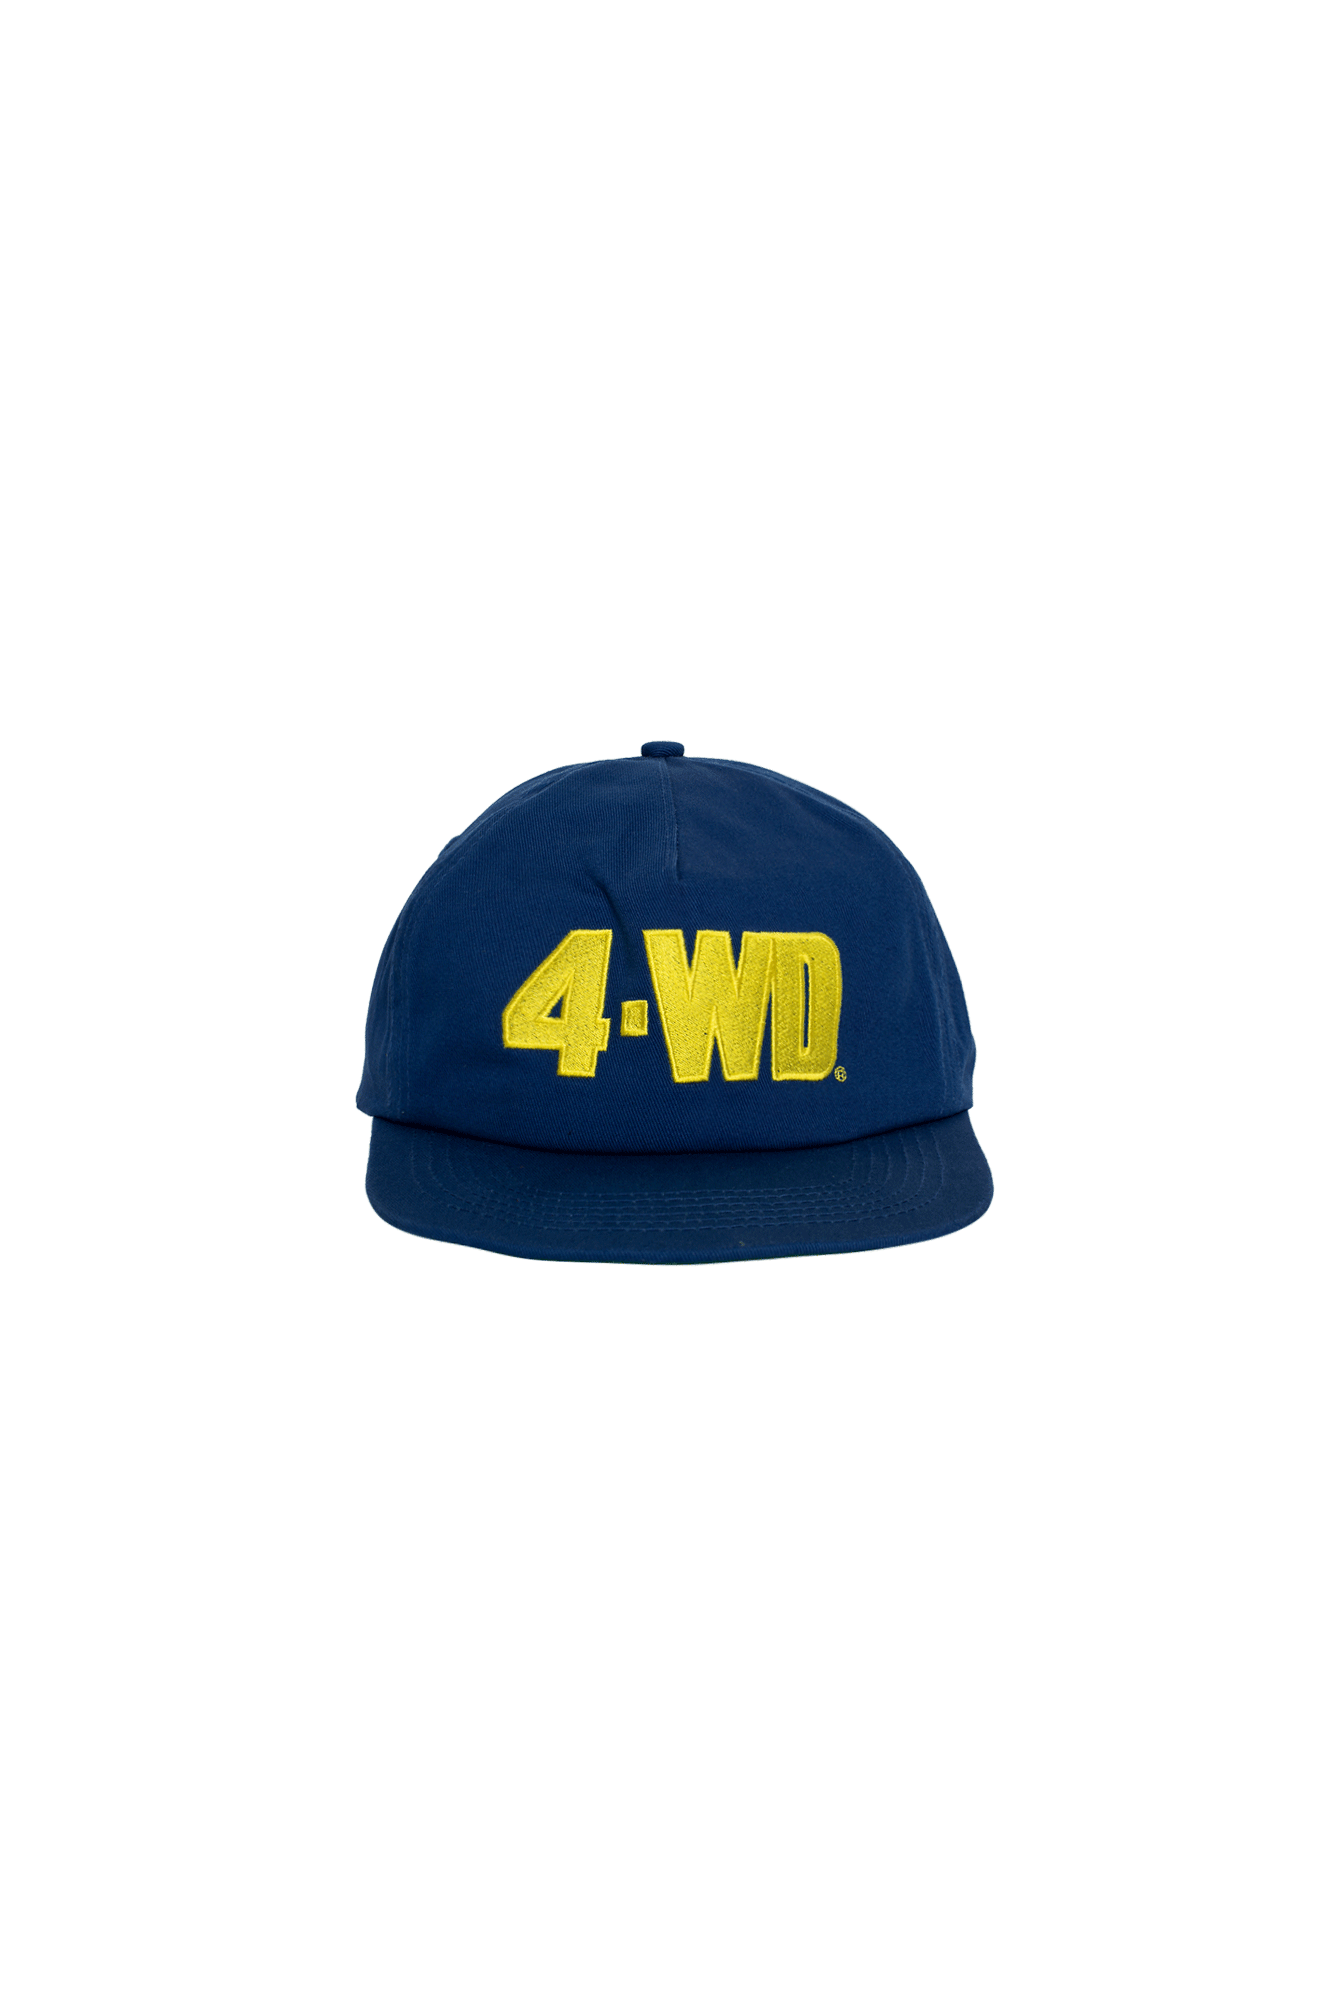 4-WD Hat